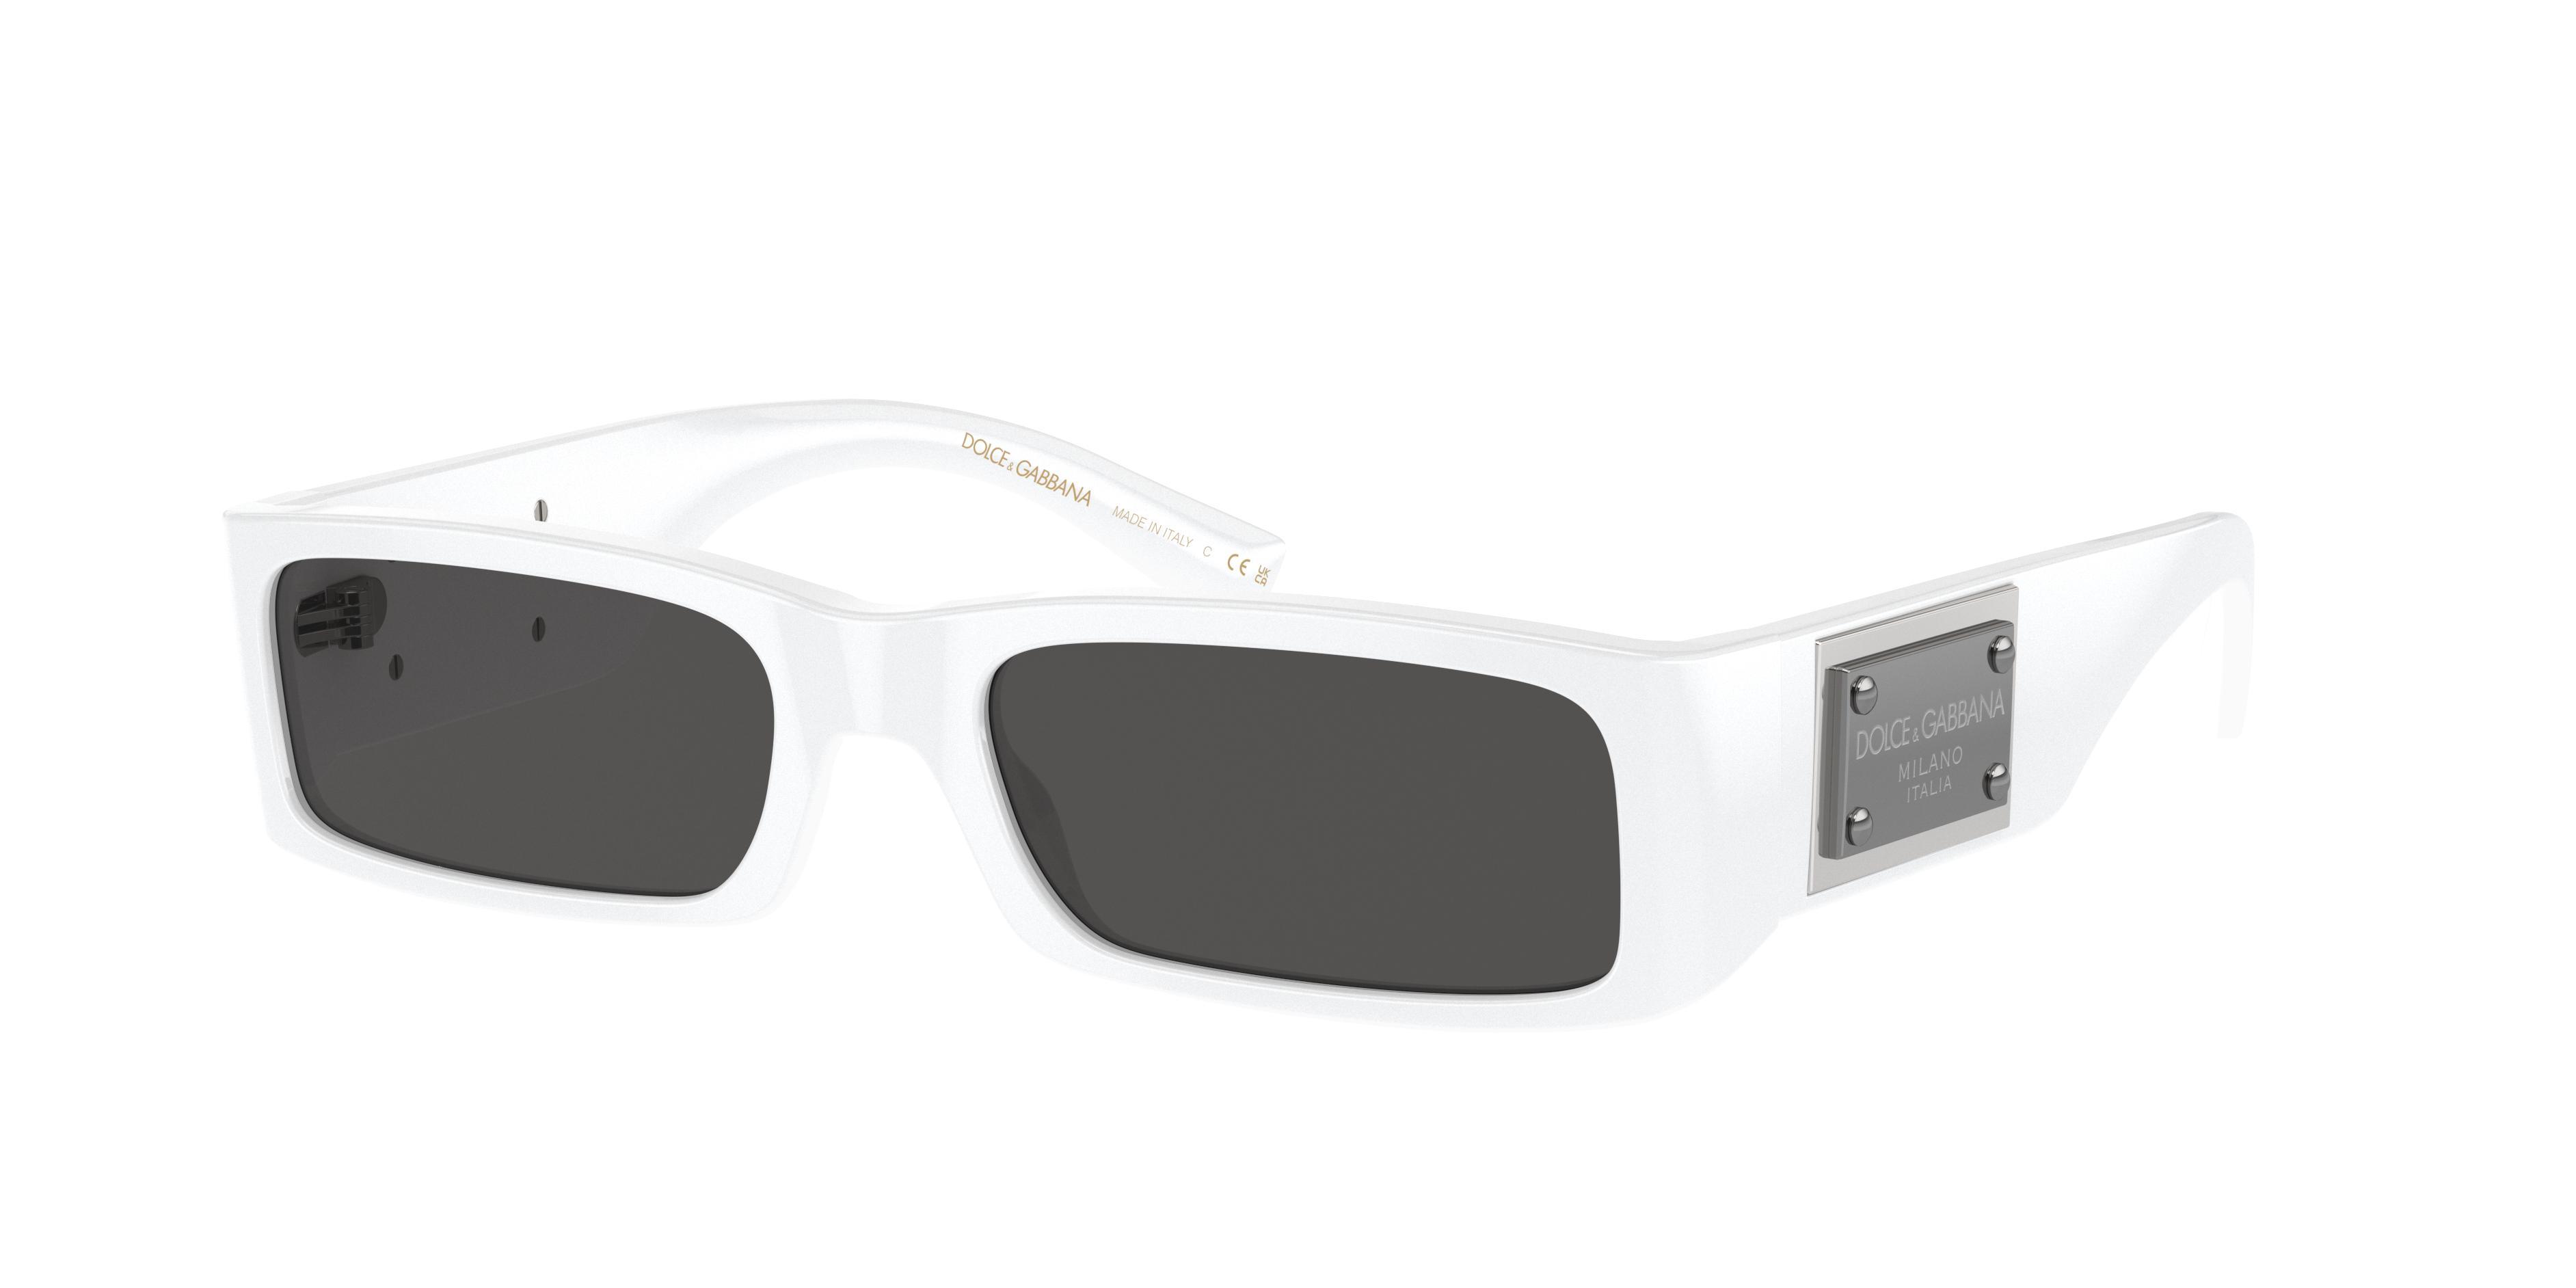 Dolce & Gabbana 55mm Square Sunglasses Product Image